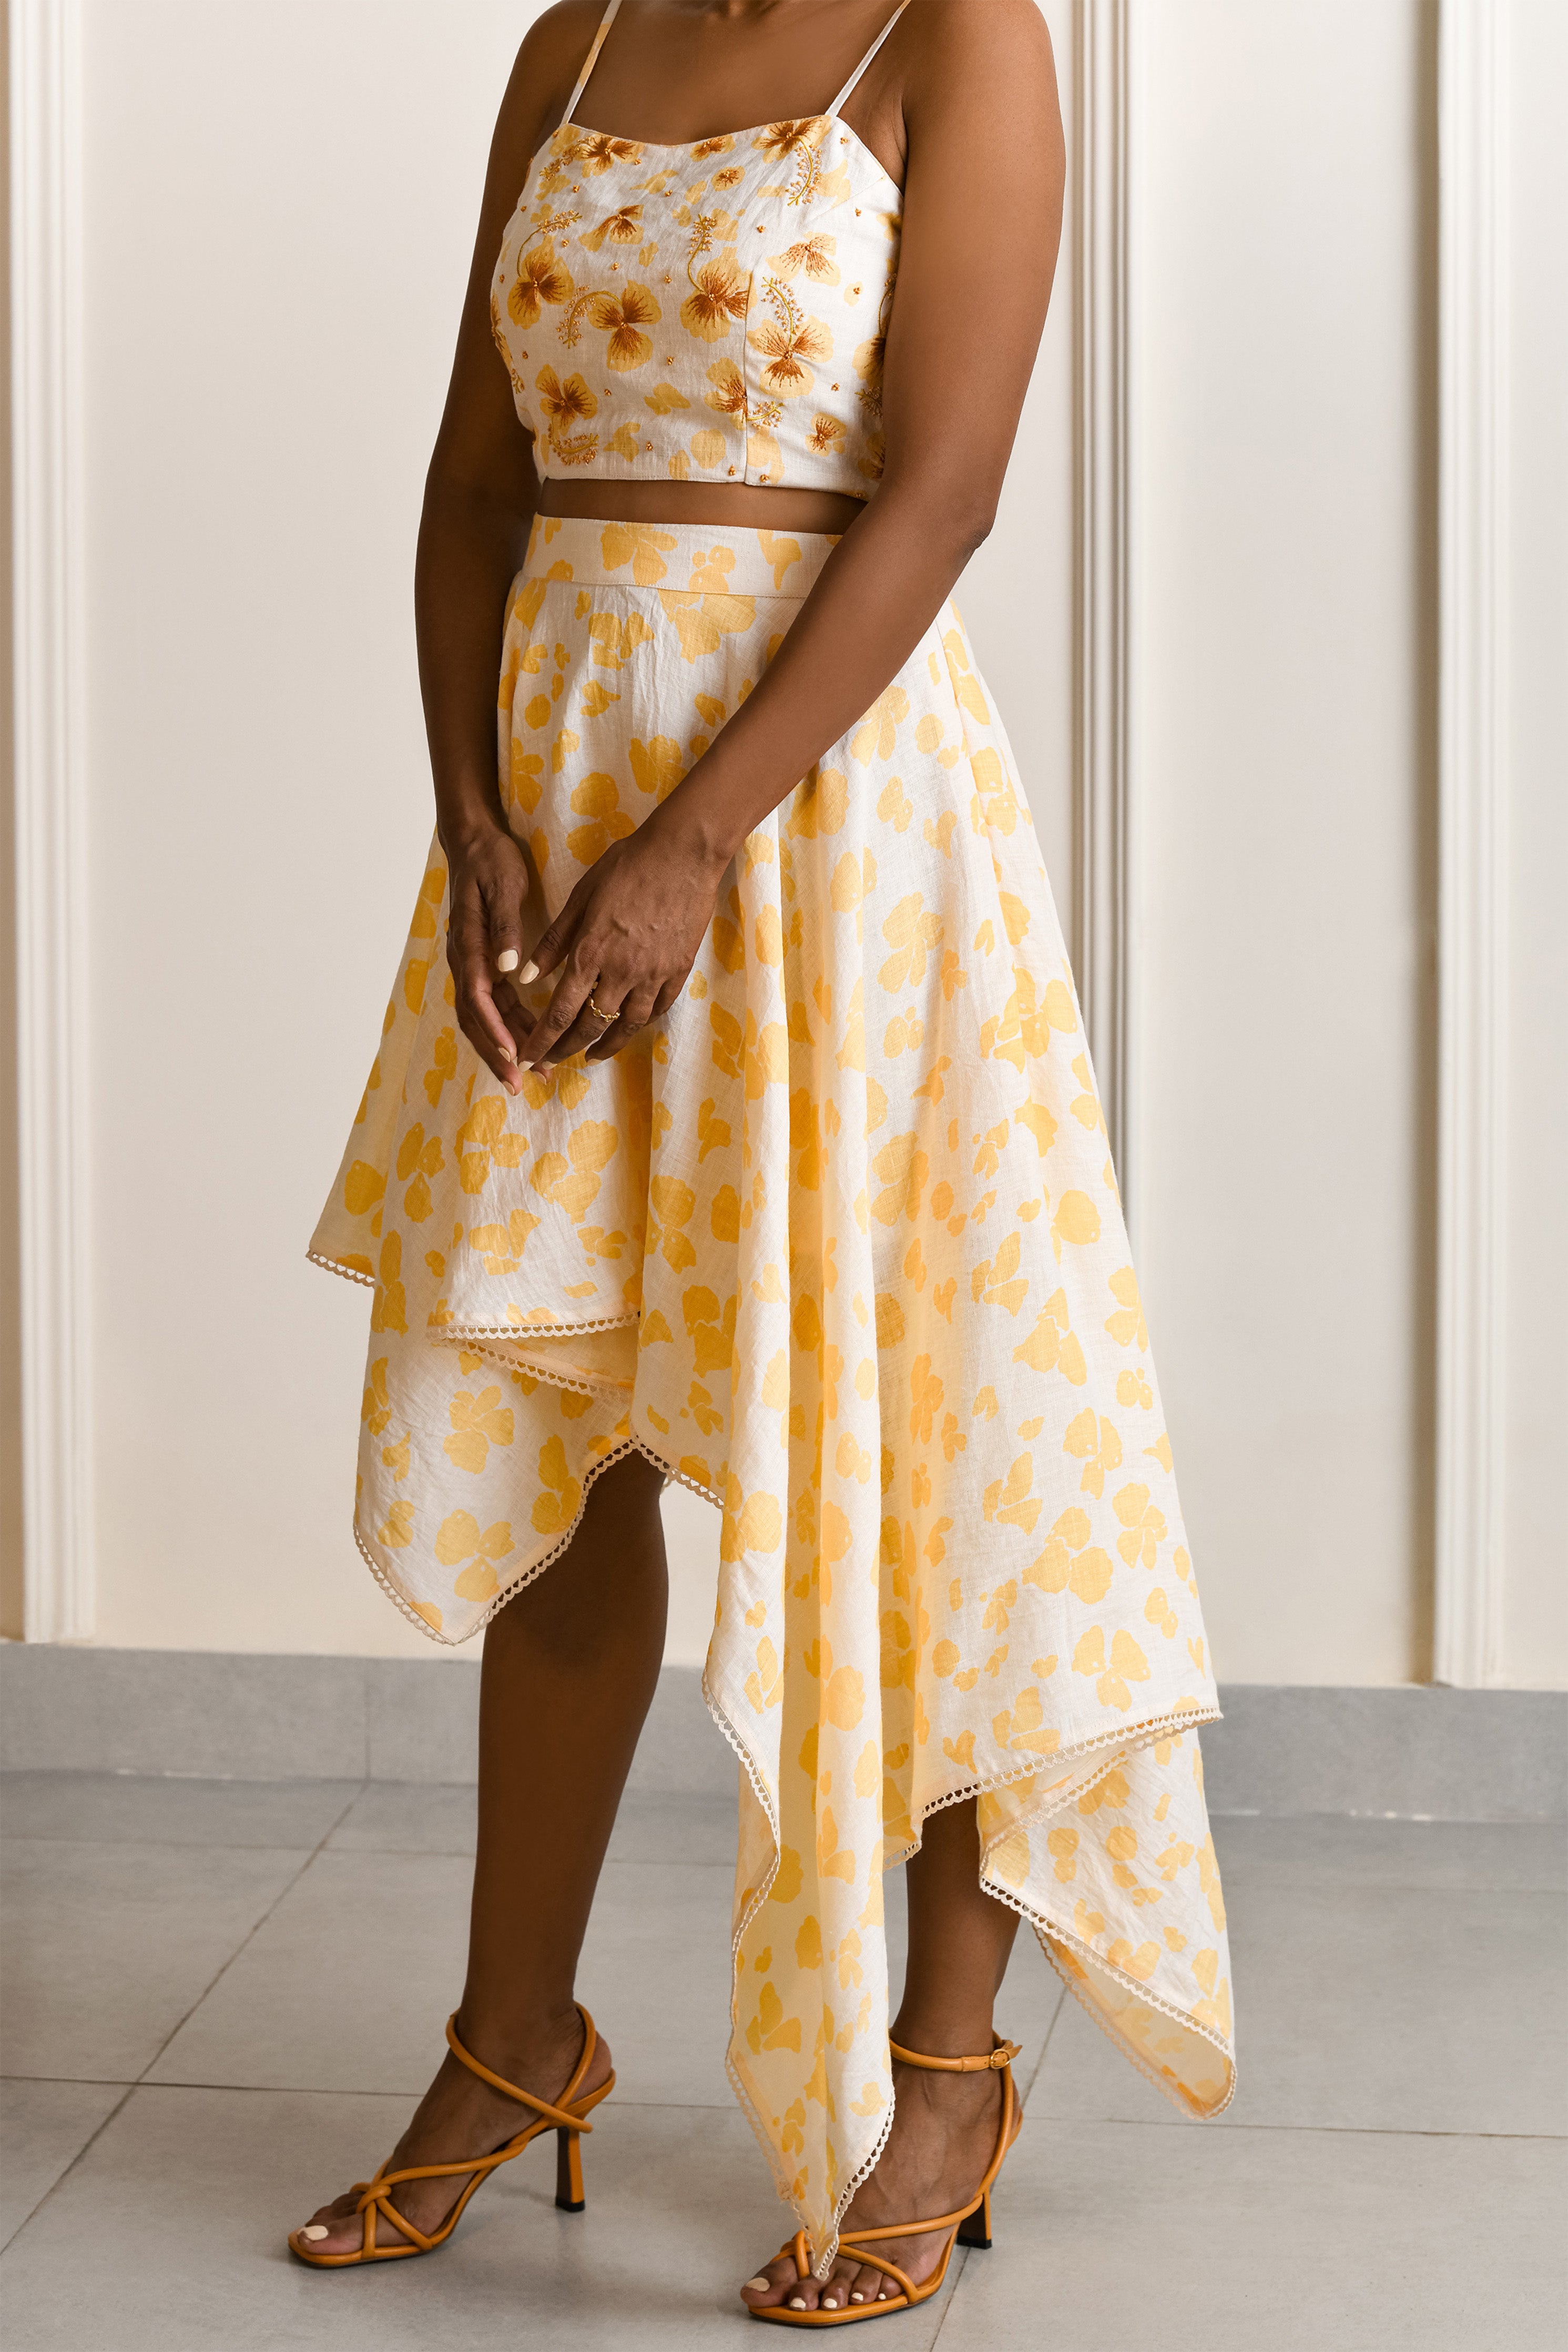 Buy PATRORNA Women's Wrap High-Low Skirt (SPV08S076_Beige_3XL) at Amazon.in